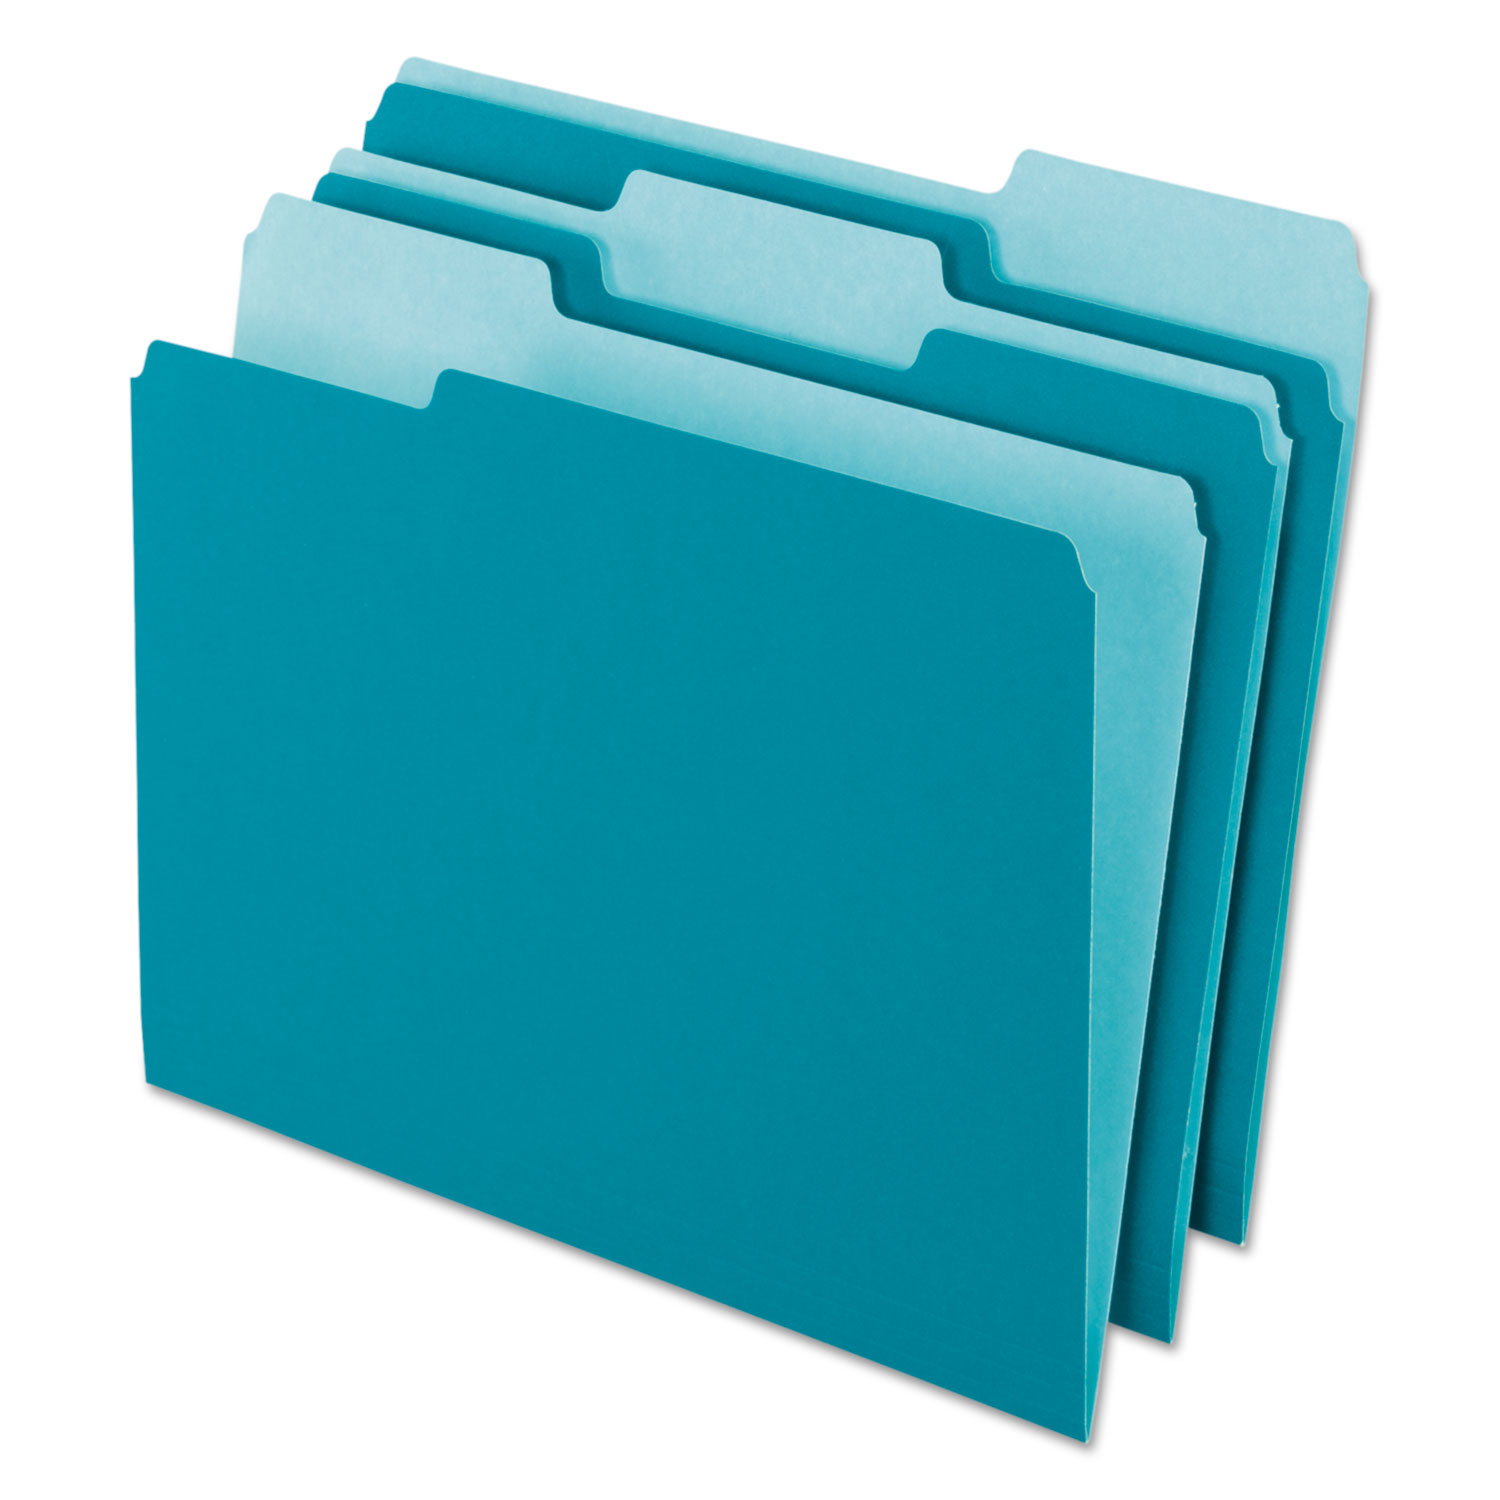  Pendaflex 4210 1/3 TEA Interior File Folders, 1/3-Cut Tabs, Letter Size, Teal, 100/Box (PFX421013TEA) 